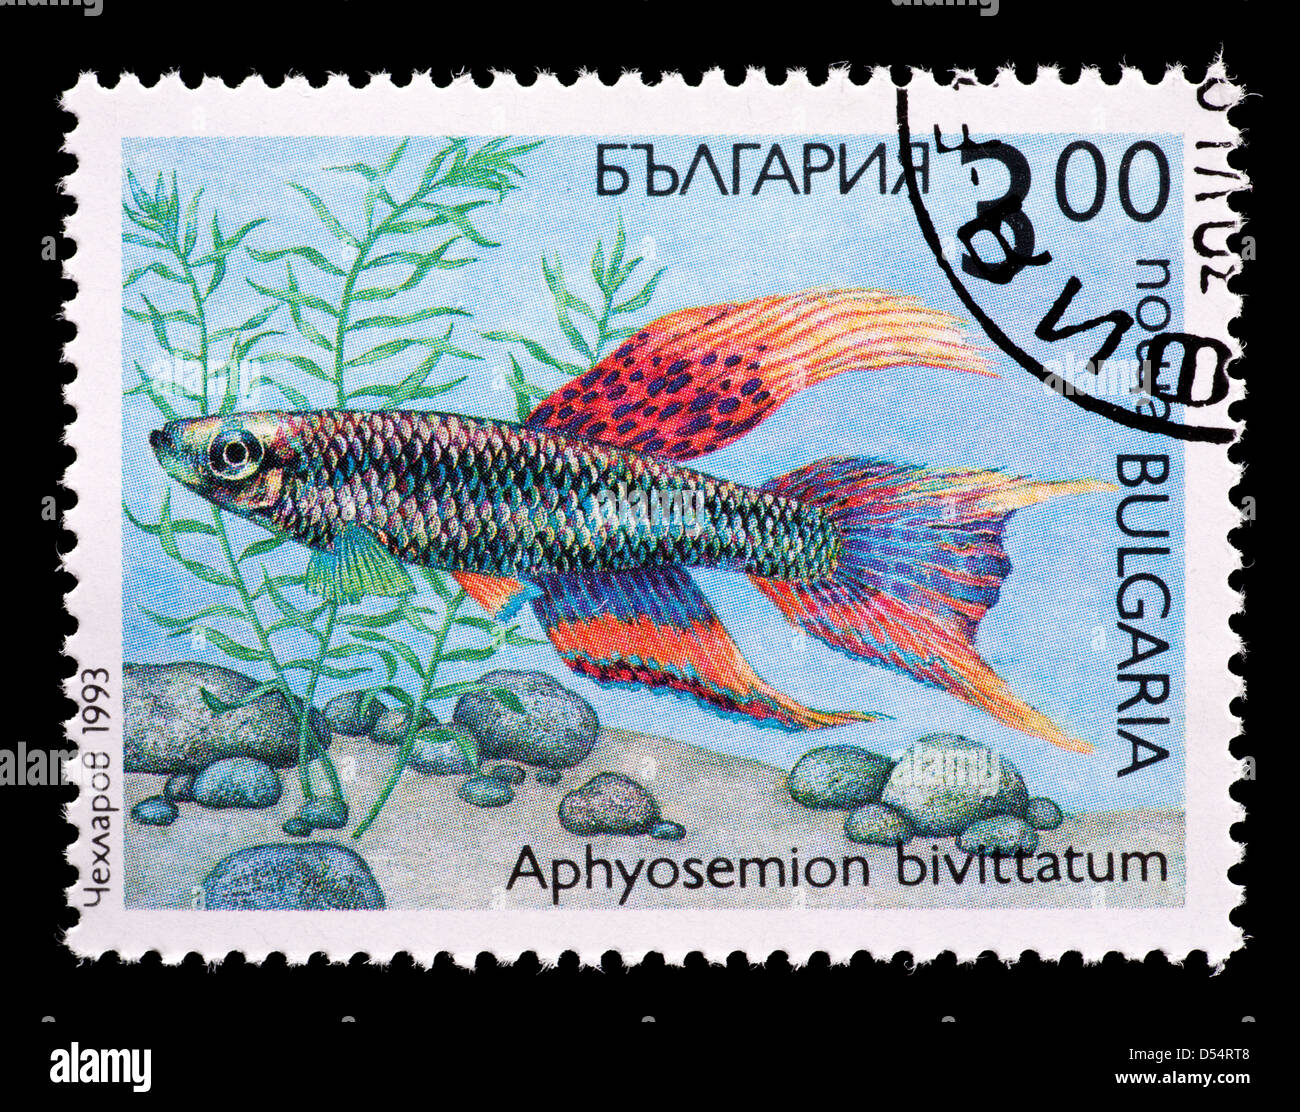 Postage stamp from Bulgaria depicting Twostripe lyretail tropical fish (Aphyosemion bivittatum) Stock Photo